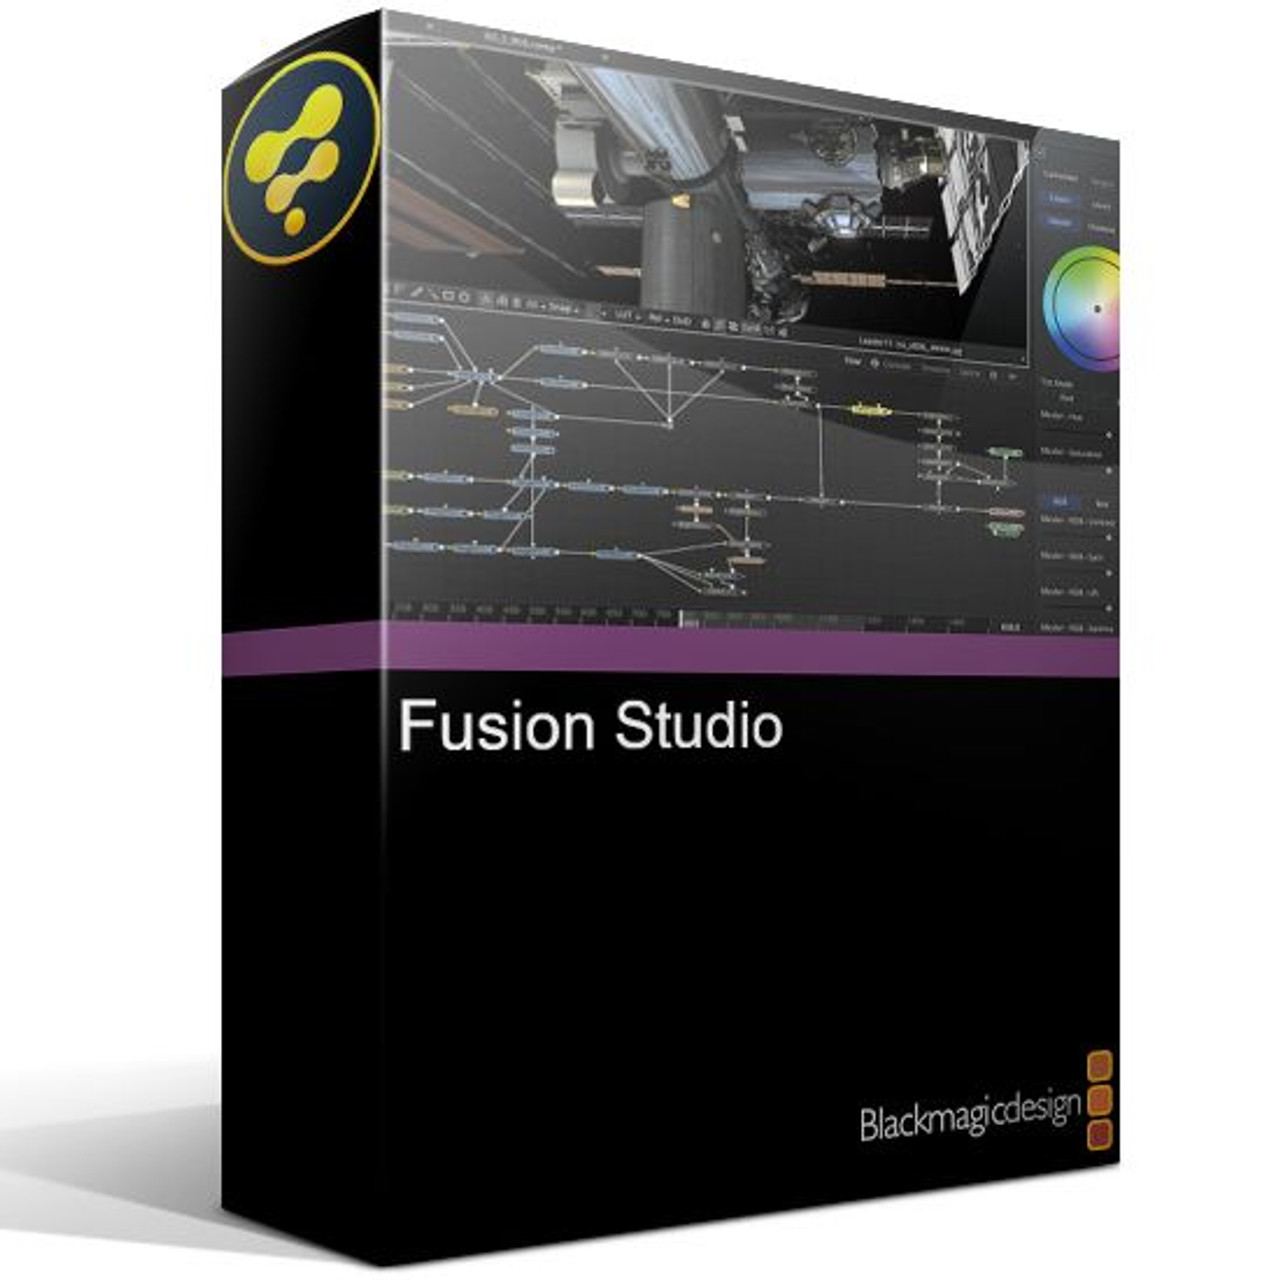 Buy Blackmagic Design Fusion Studio Software (Win/Mac/Linux) - Best Price  DV/STUFUS